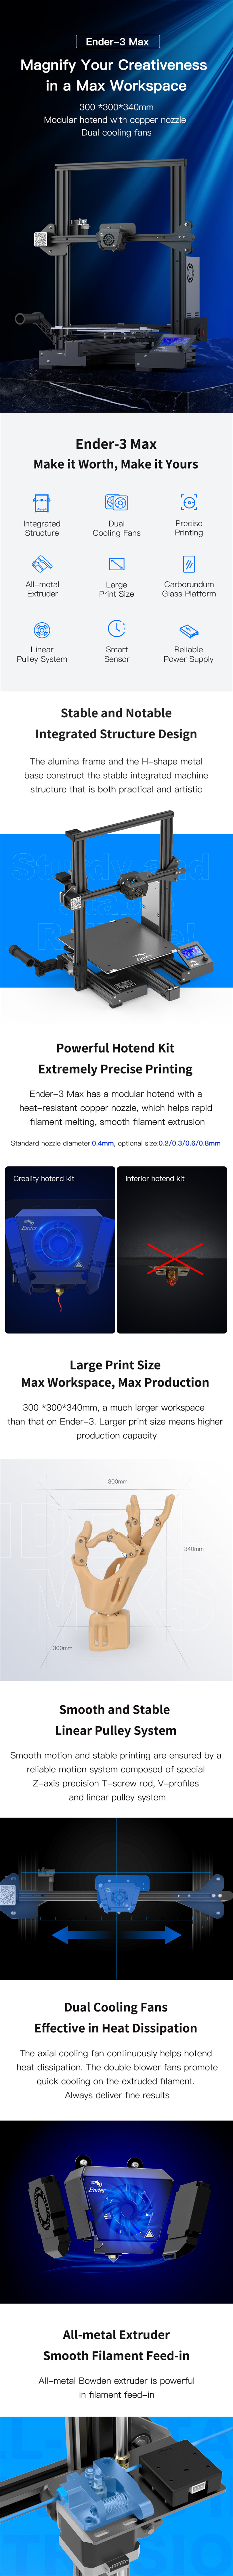 Creality 3D® Ender-3 MAX 3D Printer 300x300x340MM Prinz Size Dual Cooling Fans/All-metal Extruder/Larger Carborundum Glass Platform/Smart Sensor/Relia 1